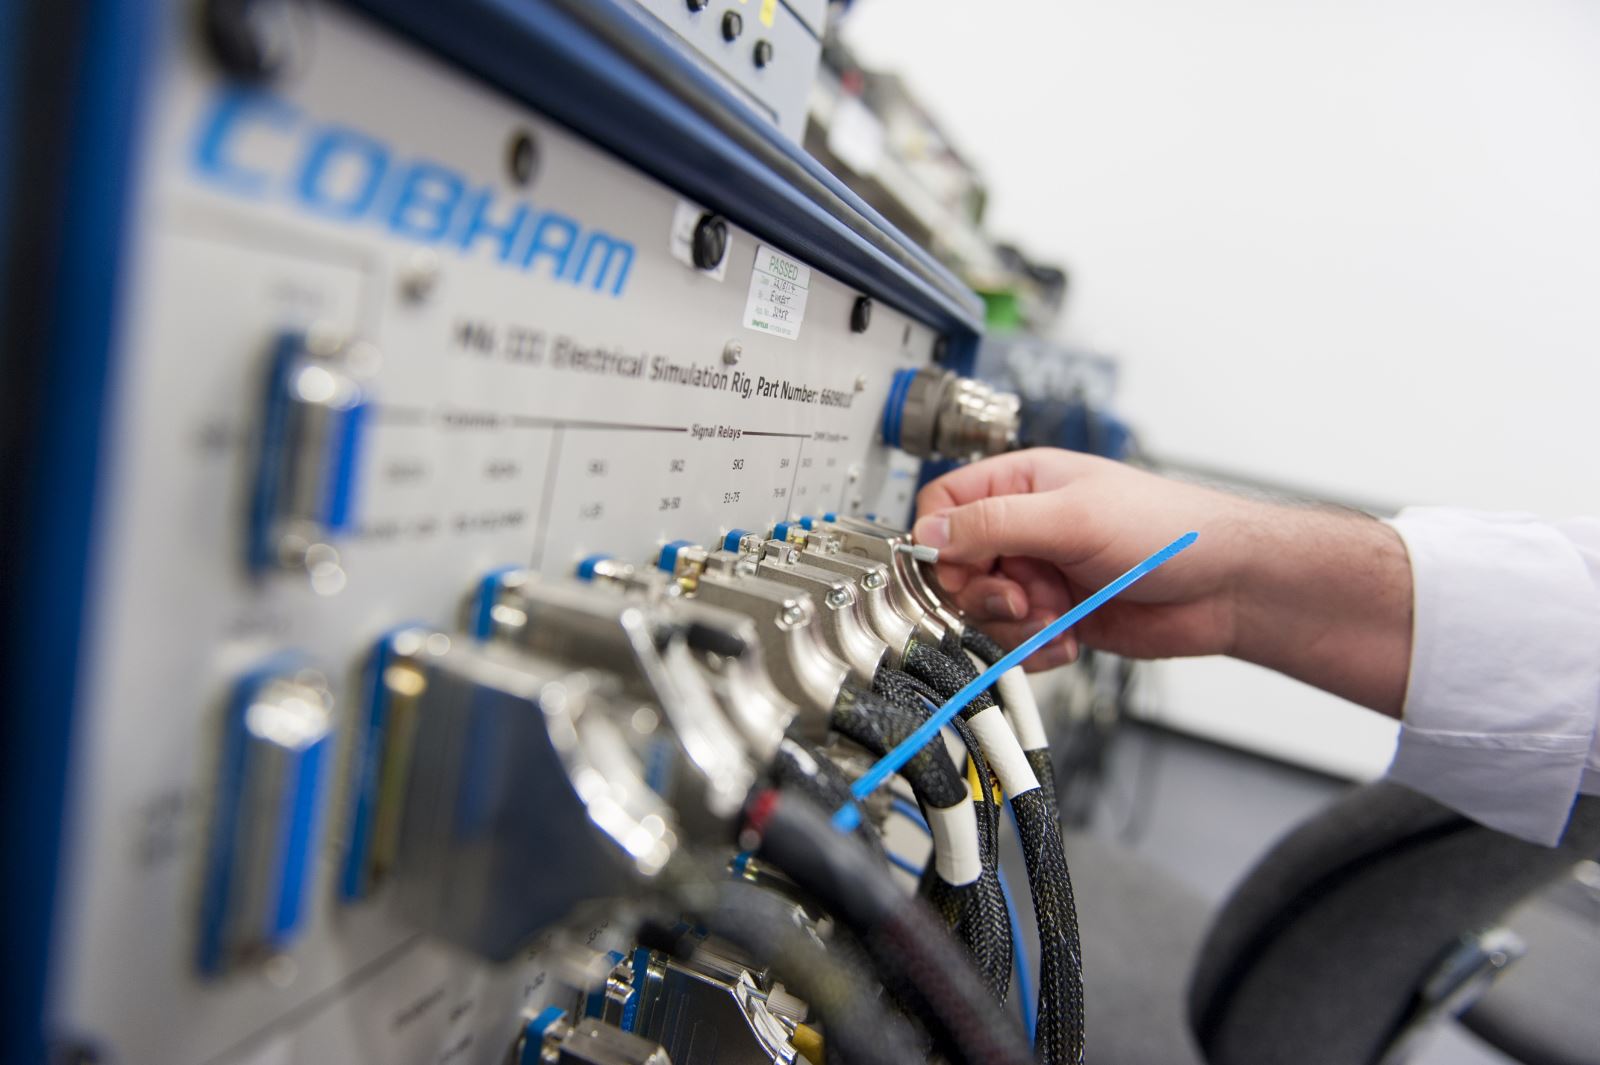 Cobham plc electrical equipment